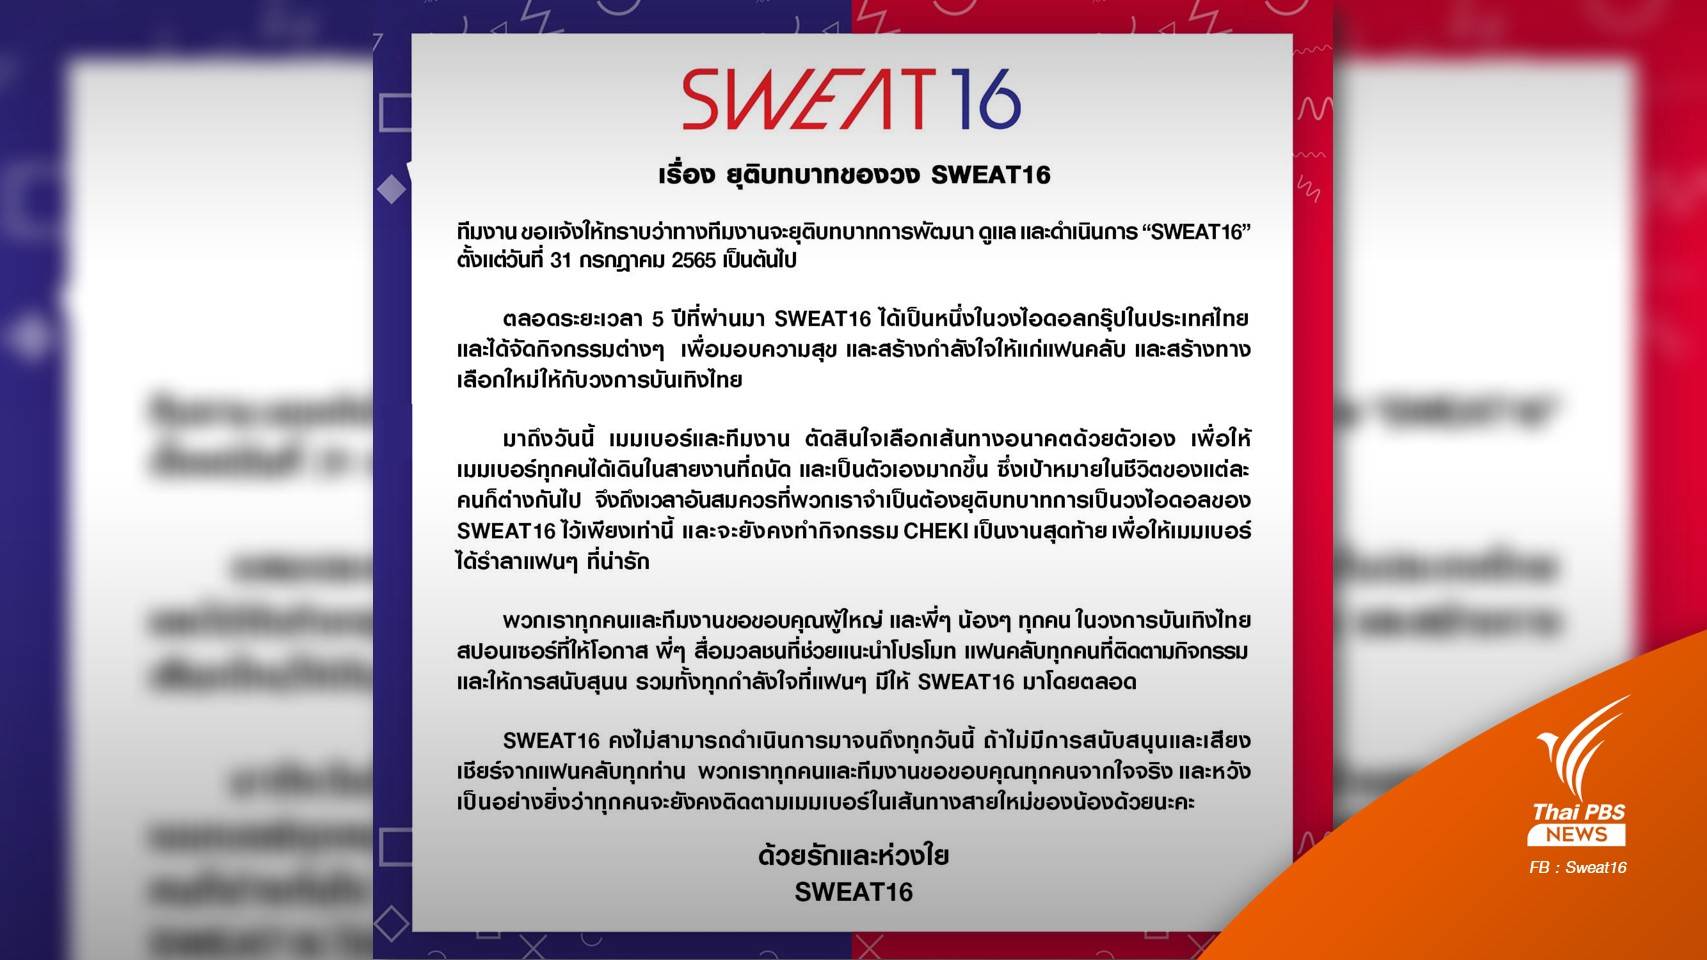 "SWEAT16" ประกาศยุติบทบาทวงไอดอล 31 ก.ค.นี้